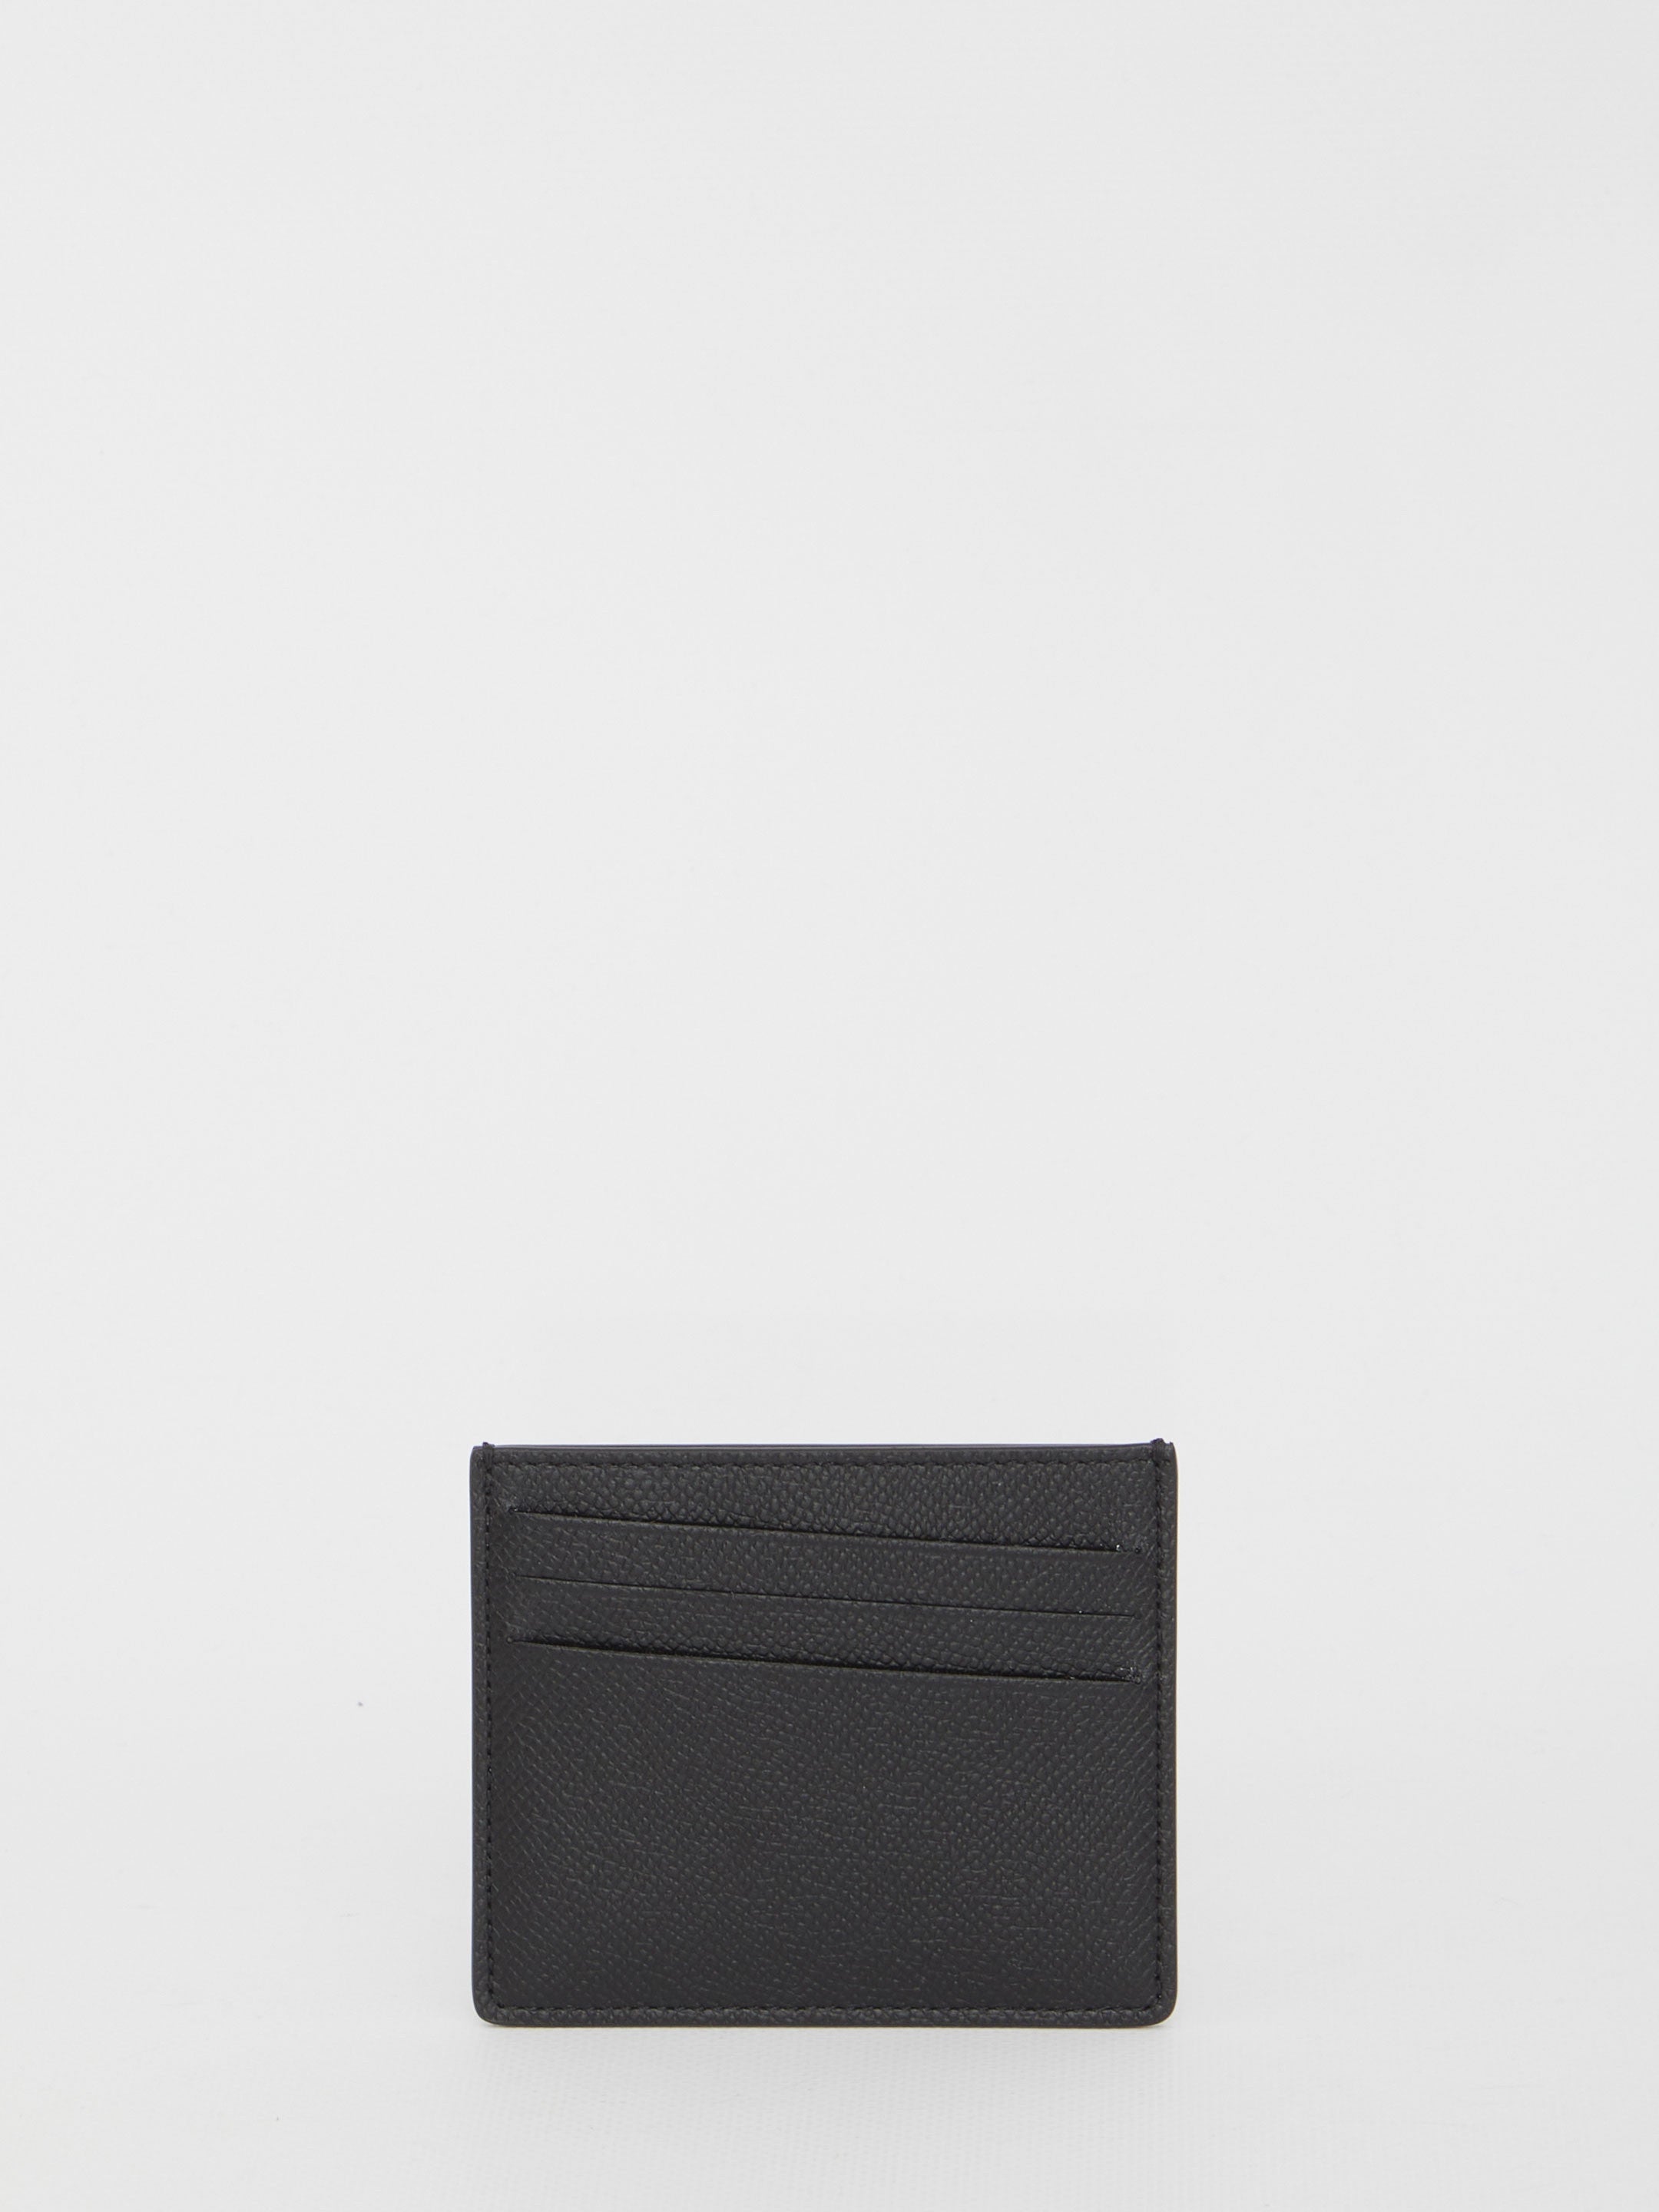 MAISON-MARGIELA-OUTLET-SALE-Black-leather-cardholder-Taschen-QT-BLACK-ARCHIVE-COLLECTION.jpg